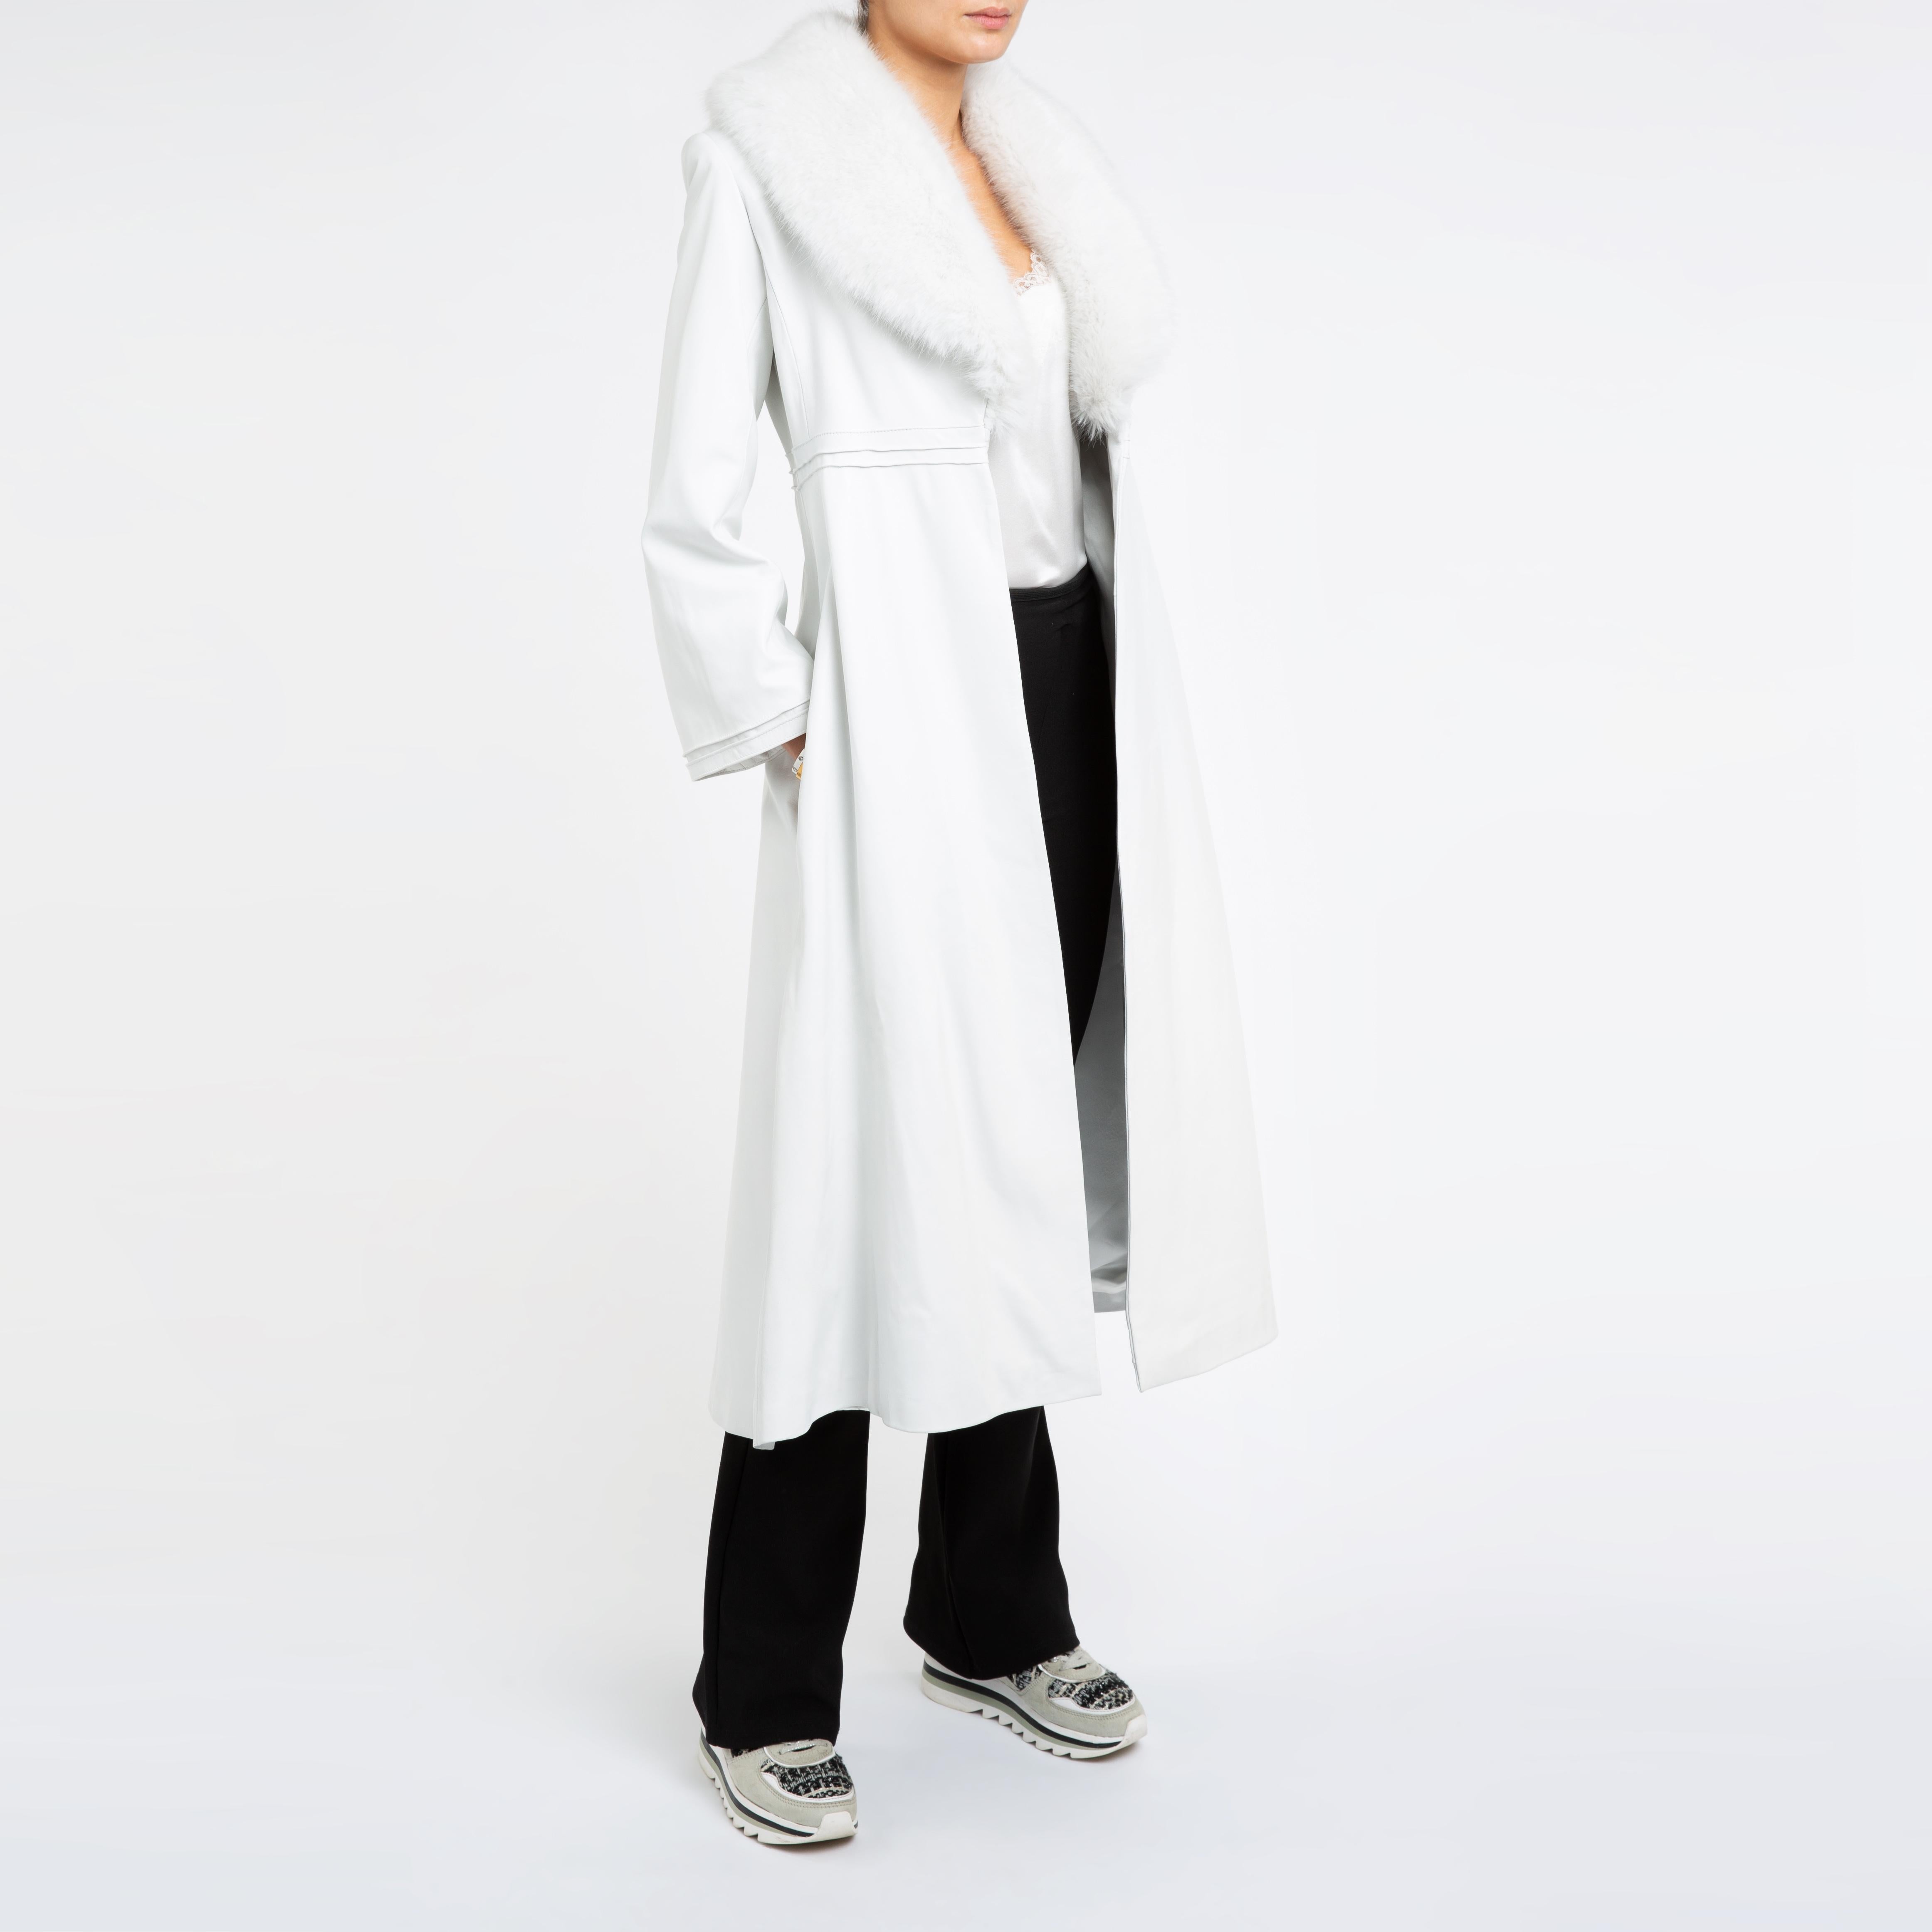 Verheyen London Edward Leather Coat in White with Faux Fur - Size uk 8  For Sale 5